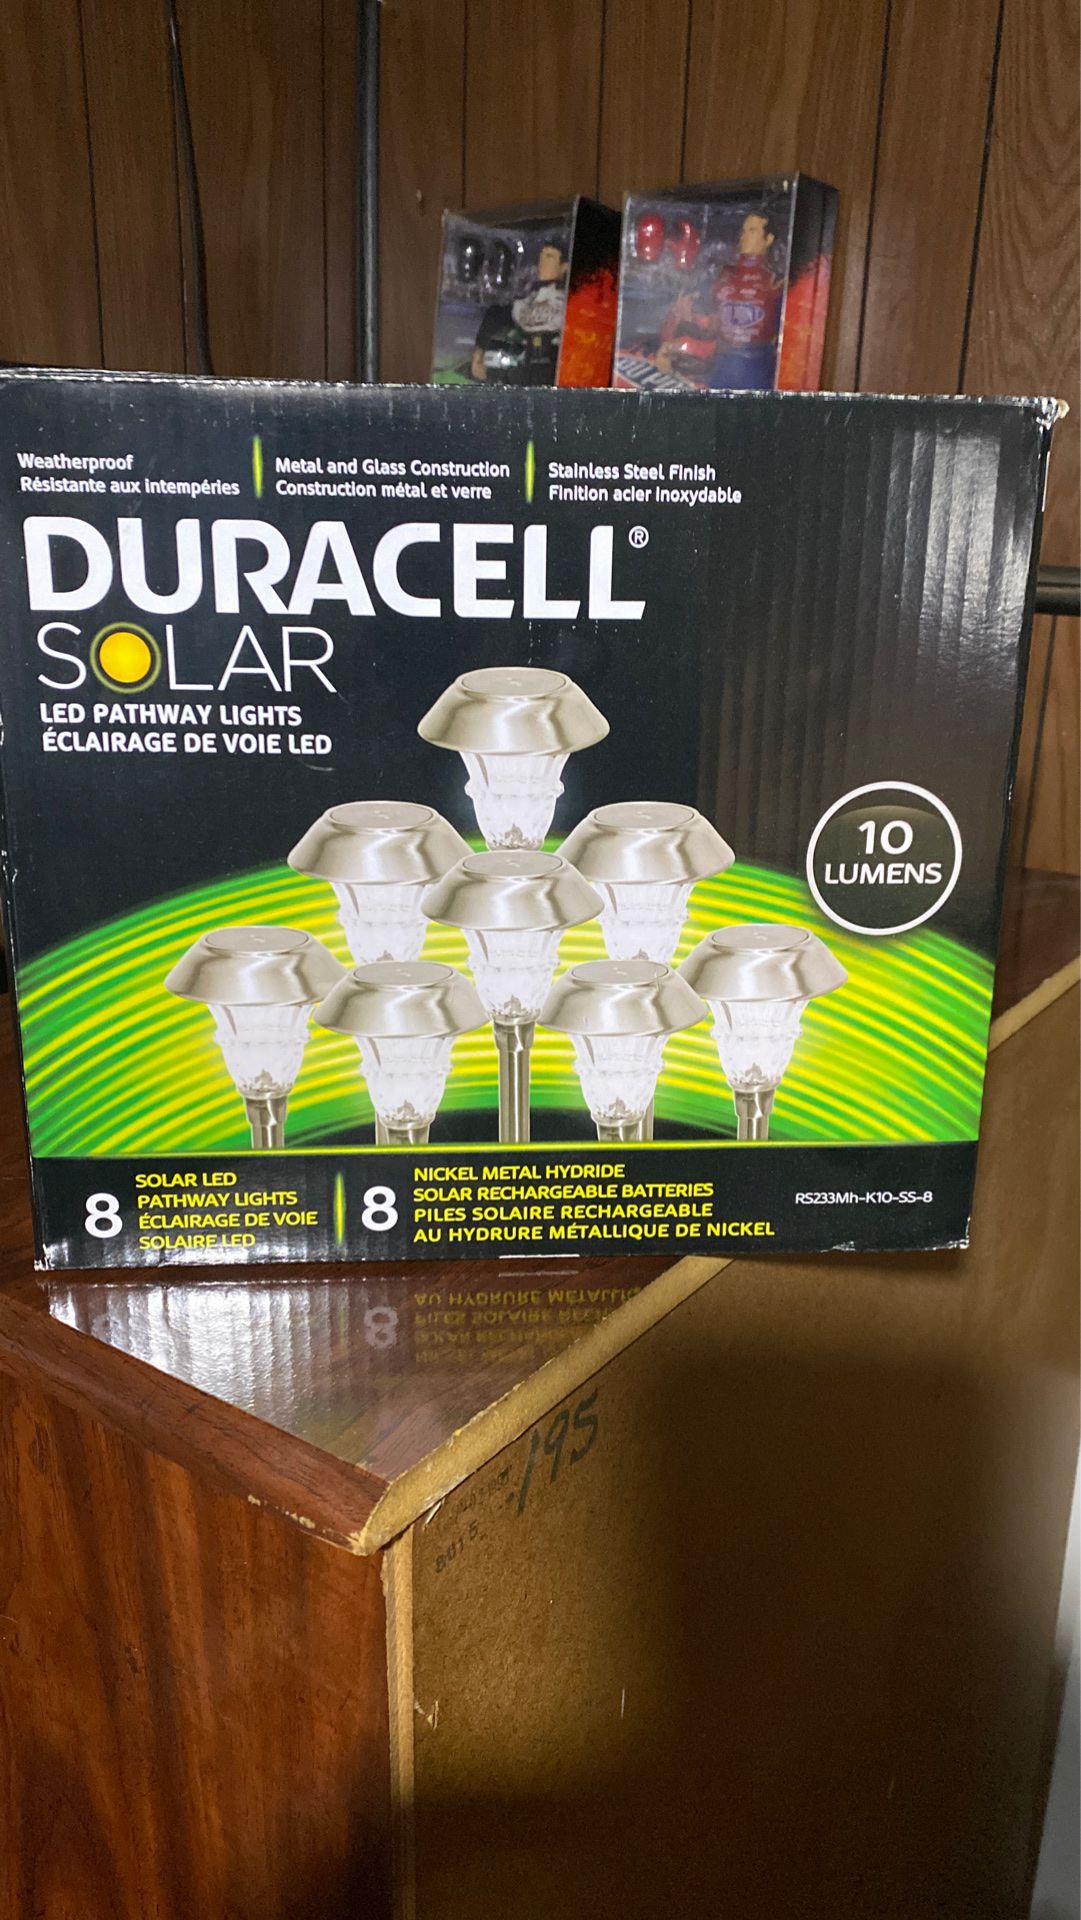 Duracell Solar lights